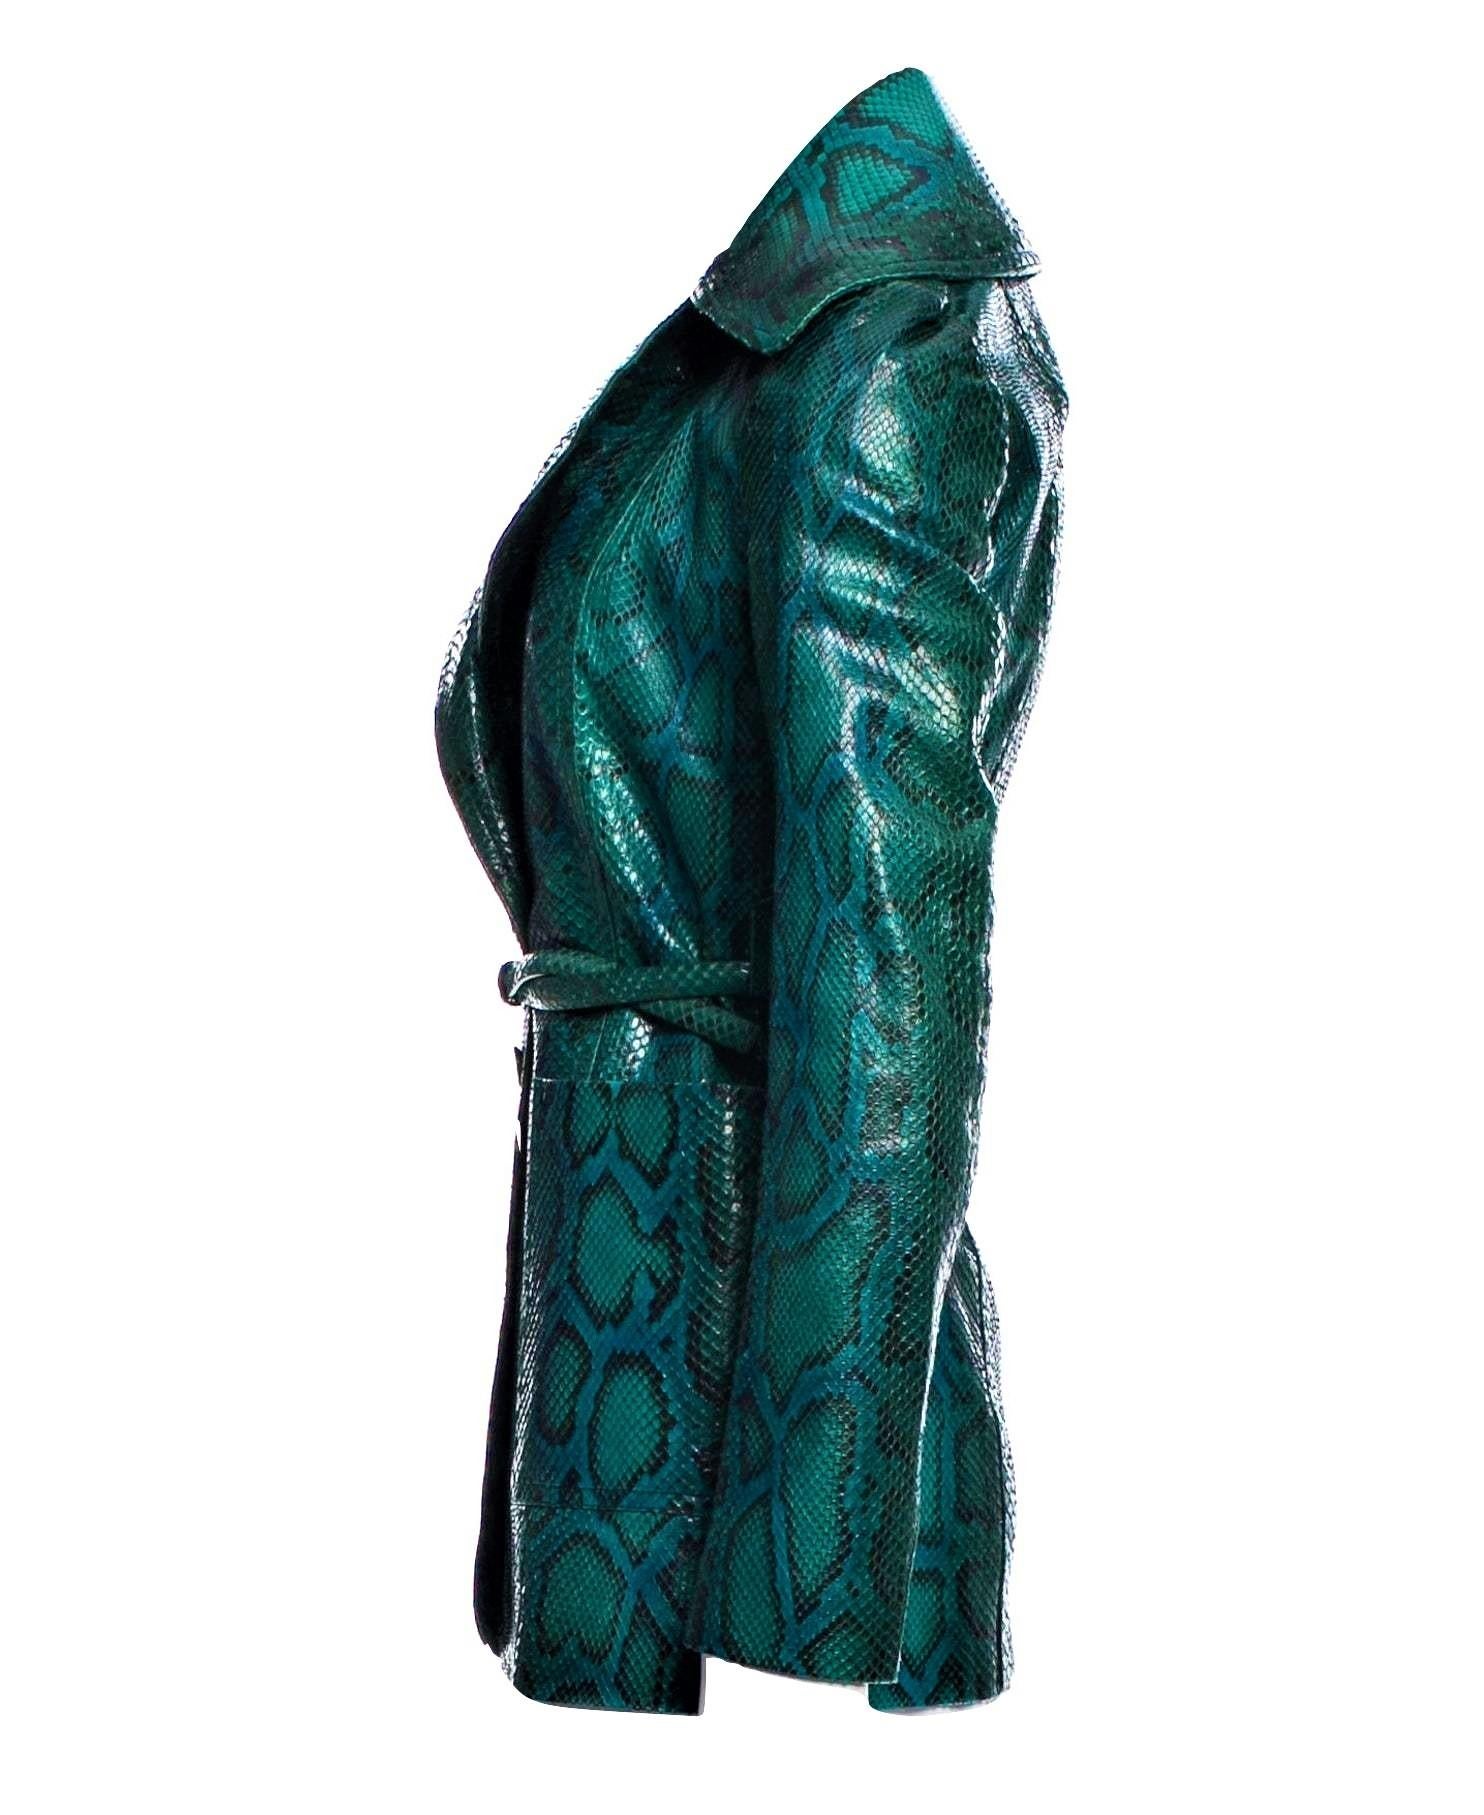 Blue New Rare Gucci 90th Anniversary Python Snakeskin Jacket Gaga Coat Blazer $14, 650